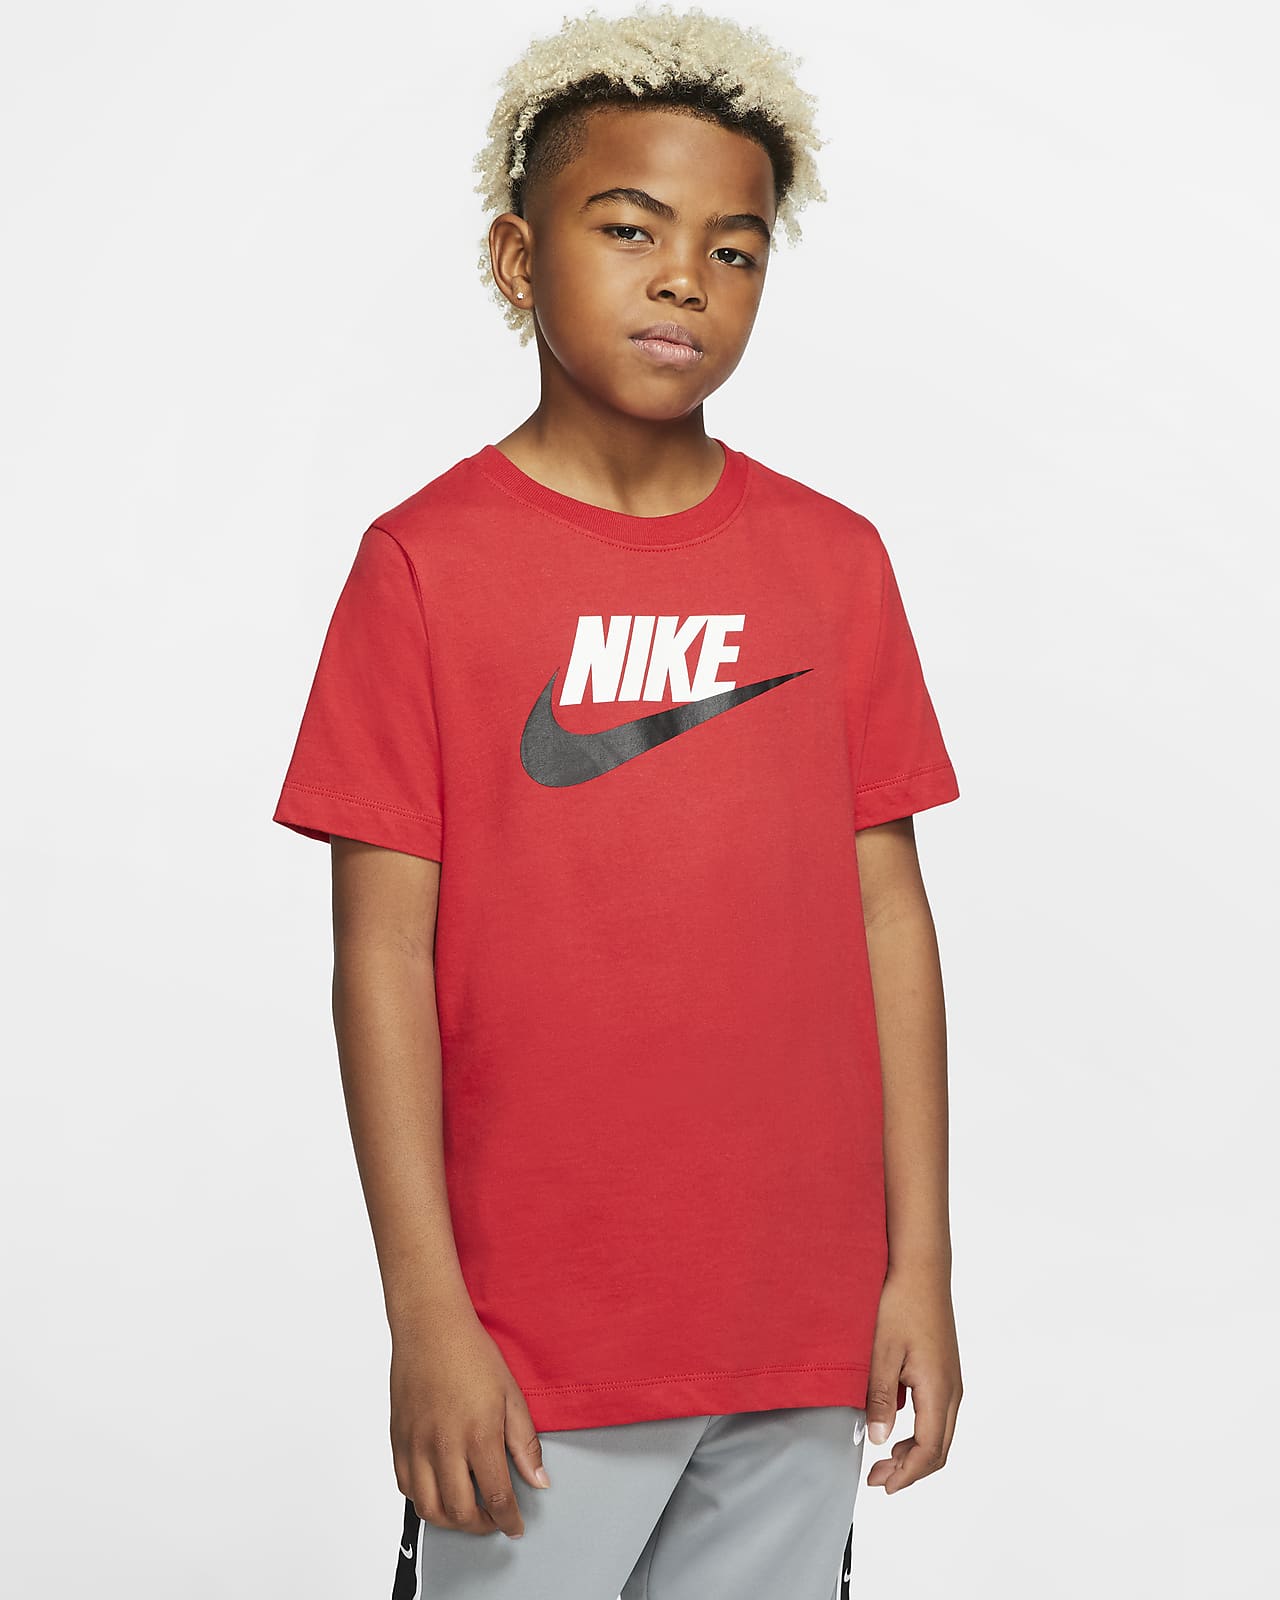 Bomulls-t-shirt Nike Sportswear för ungdom